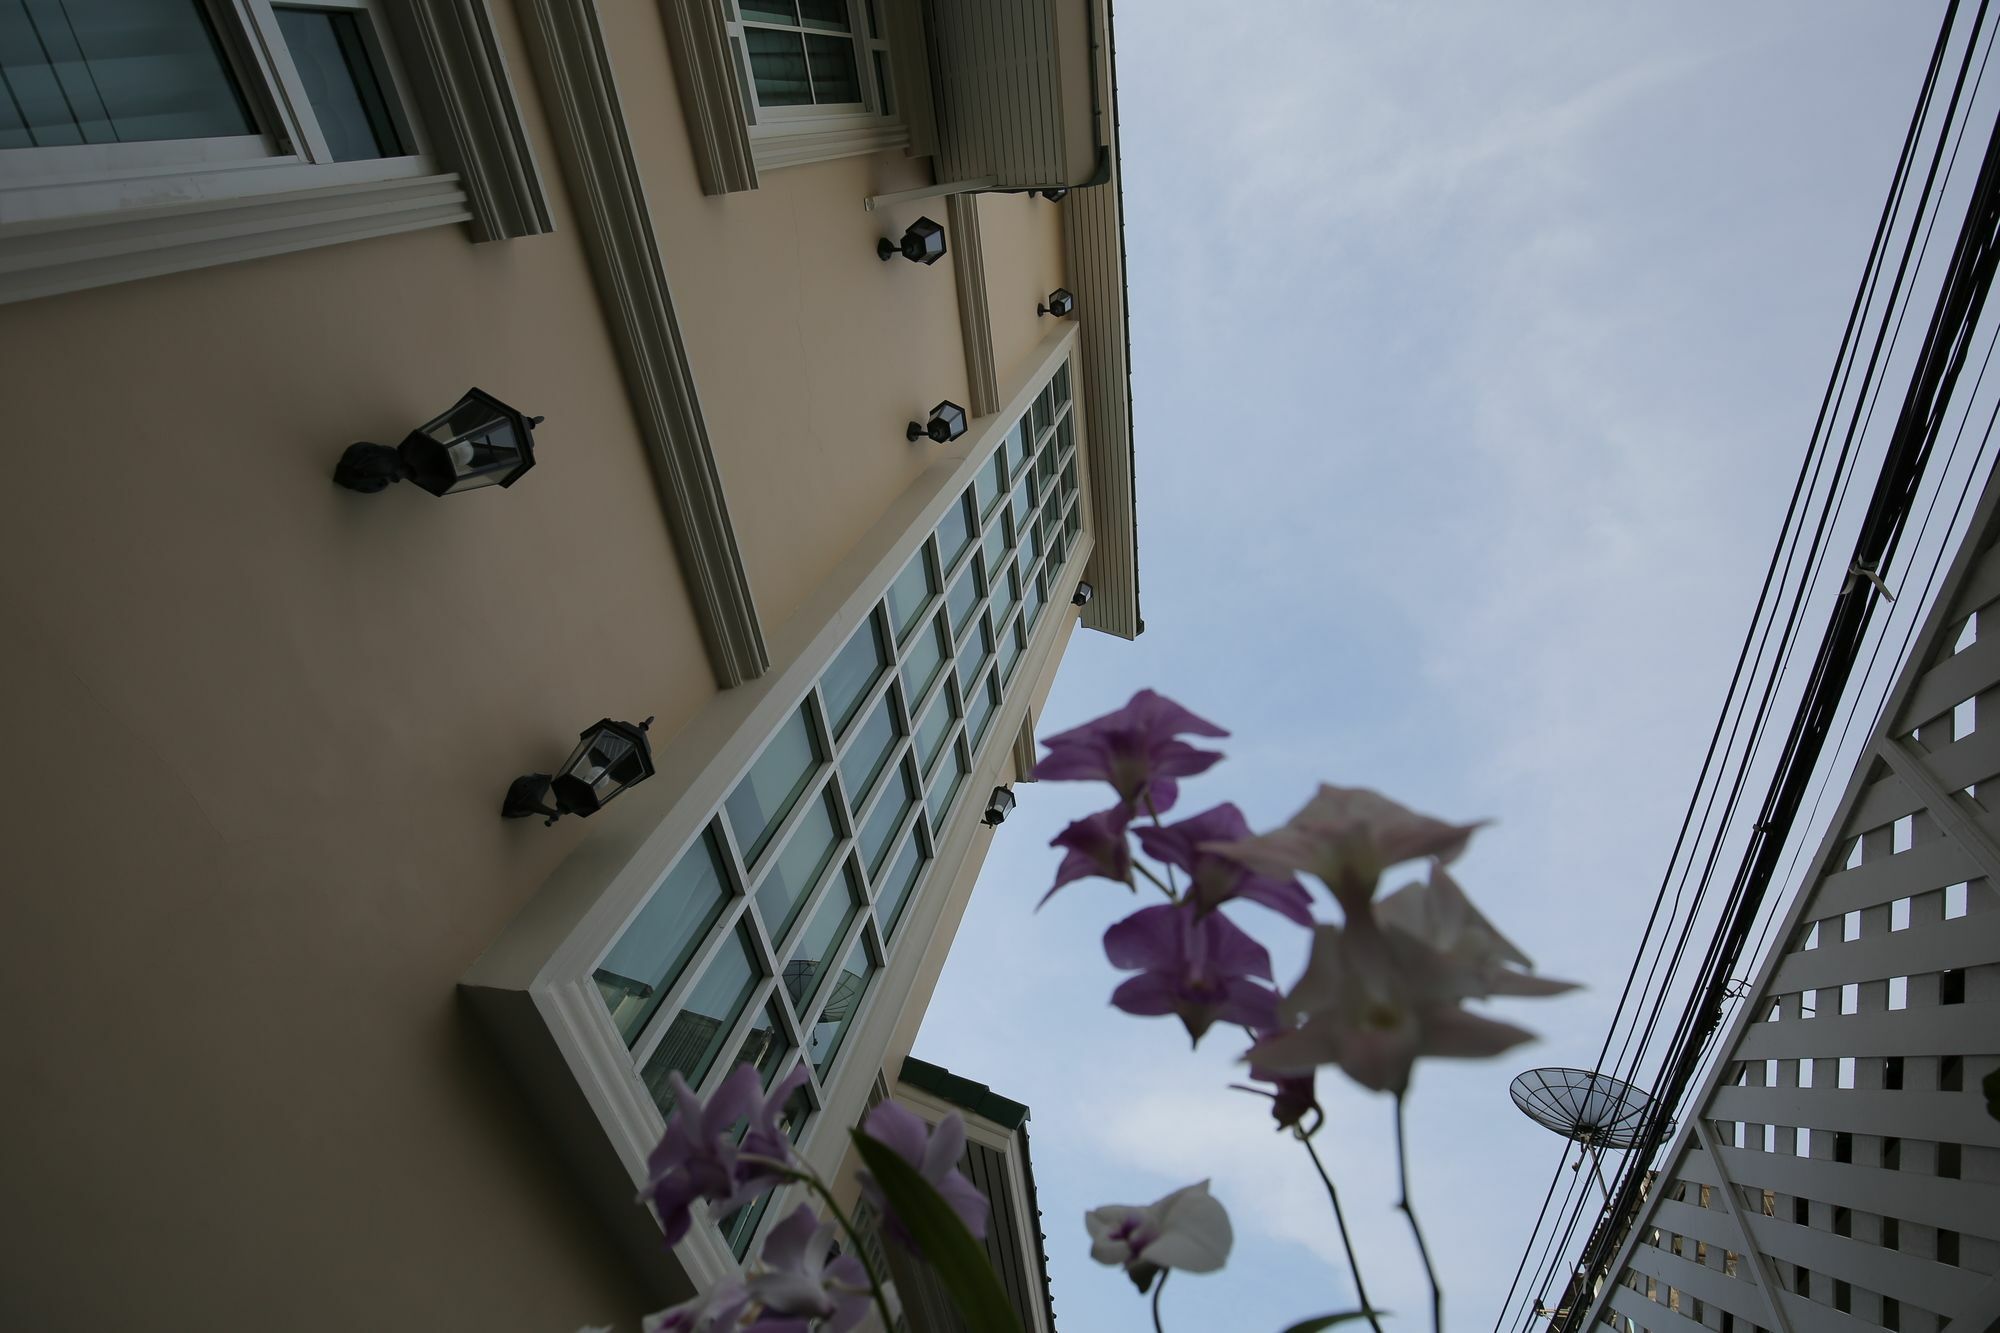 The Orchid House 153 Hotel Bangkok Esterno foto